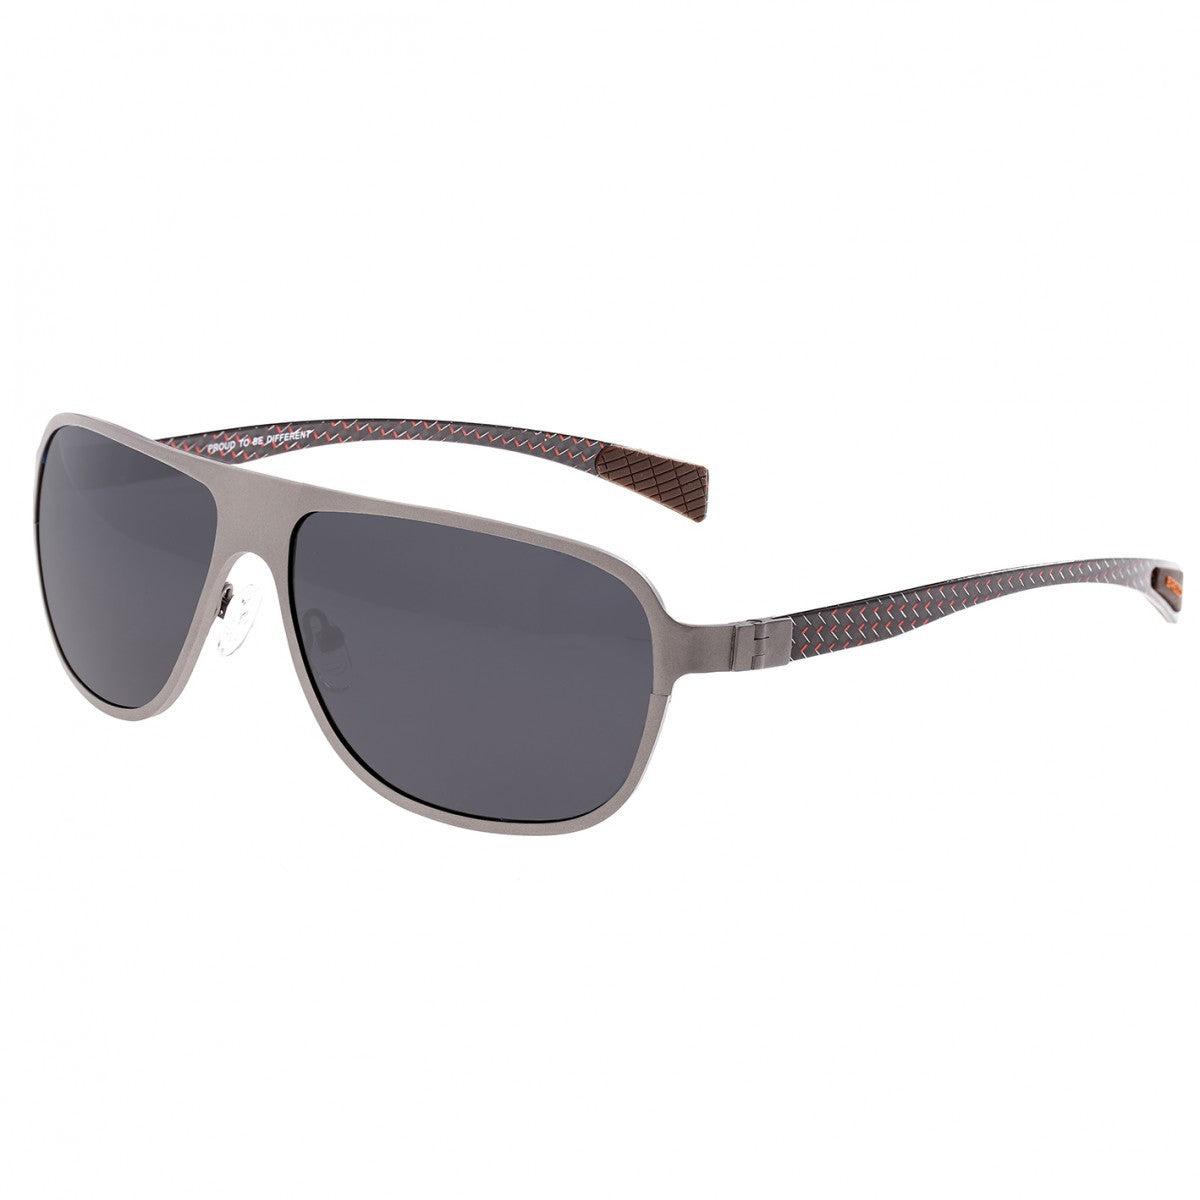 Breed Atmosphere Titanium and Carbon Fiber Polarized Sunglasses -  Gunmetal/Black - BSG004GM